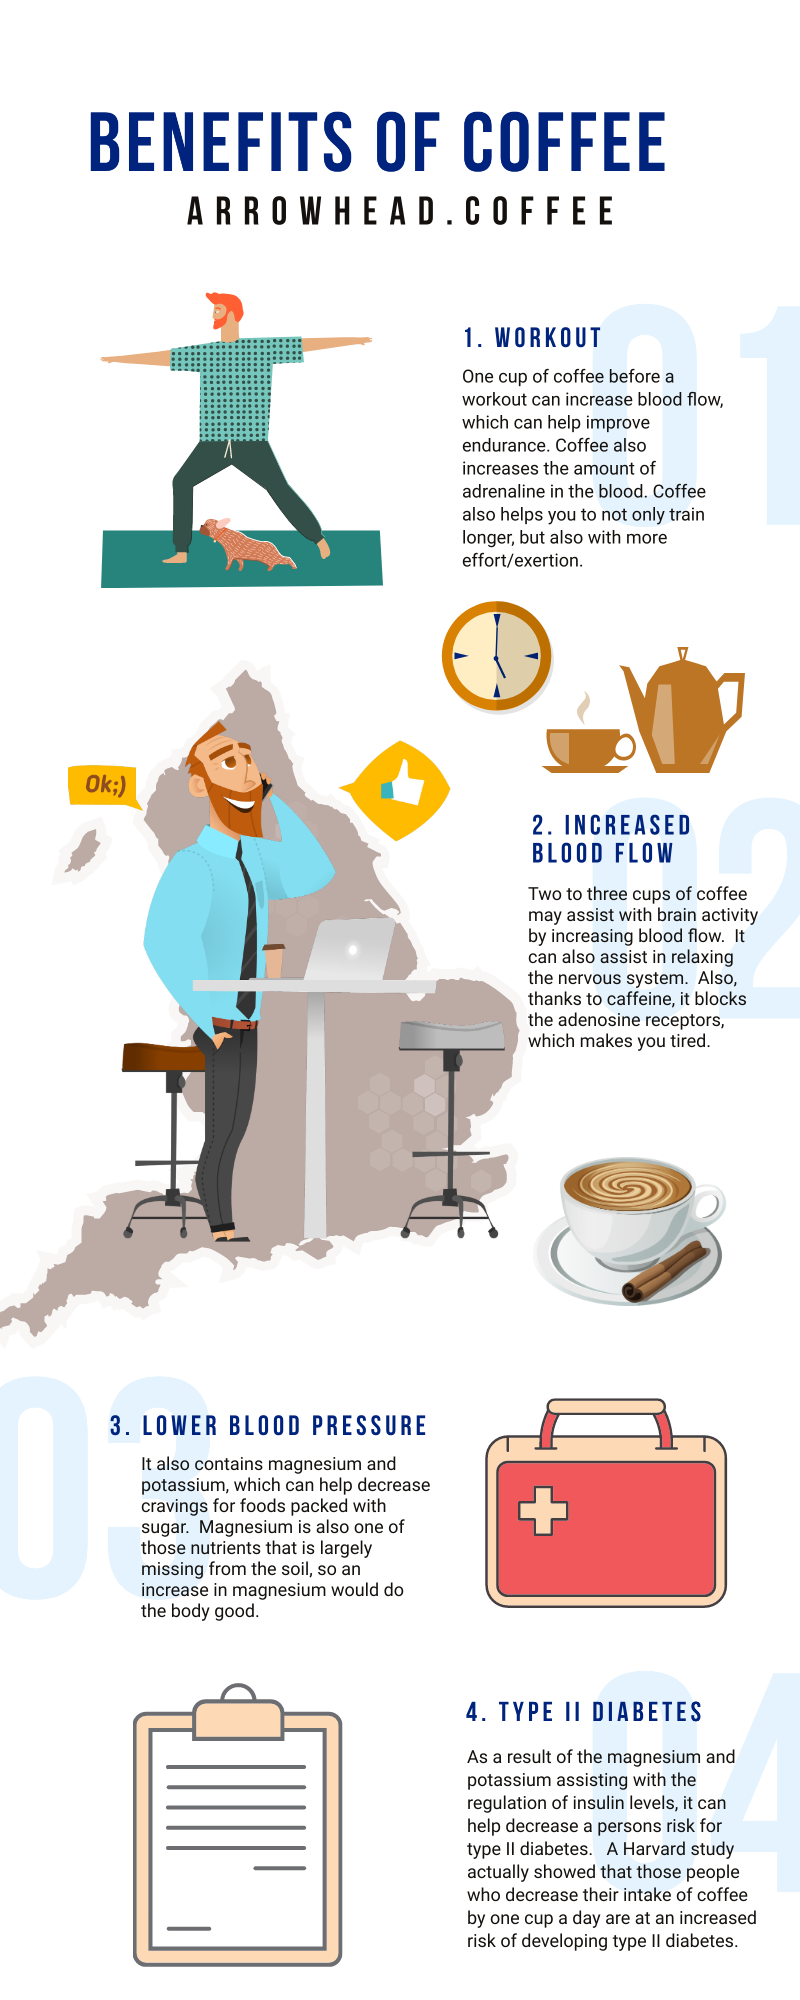 Health Benefits of Coffee - Arrowhead Coffee Company